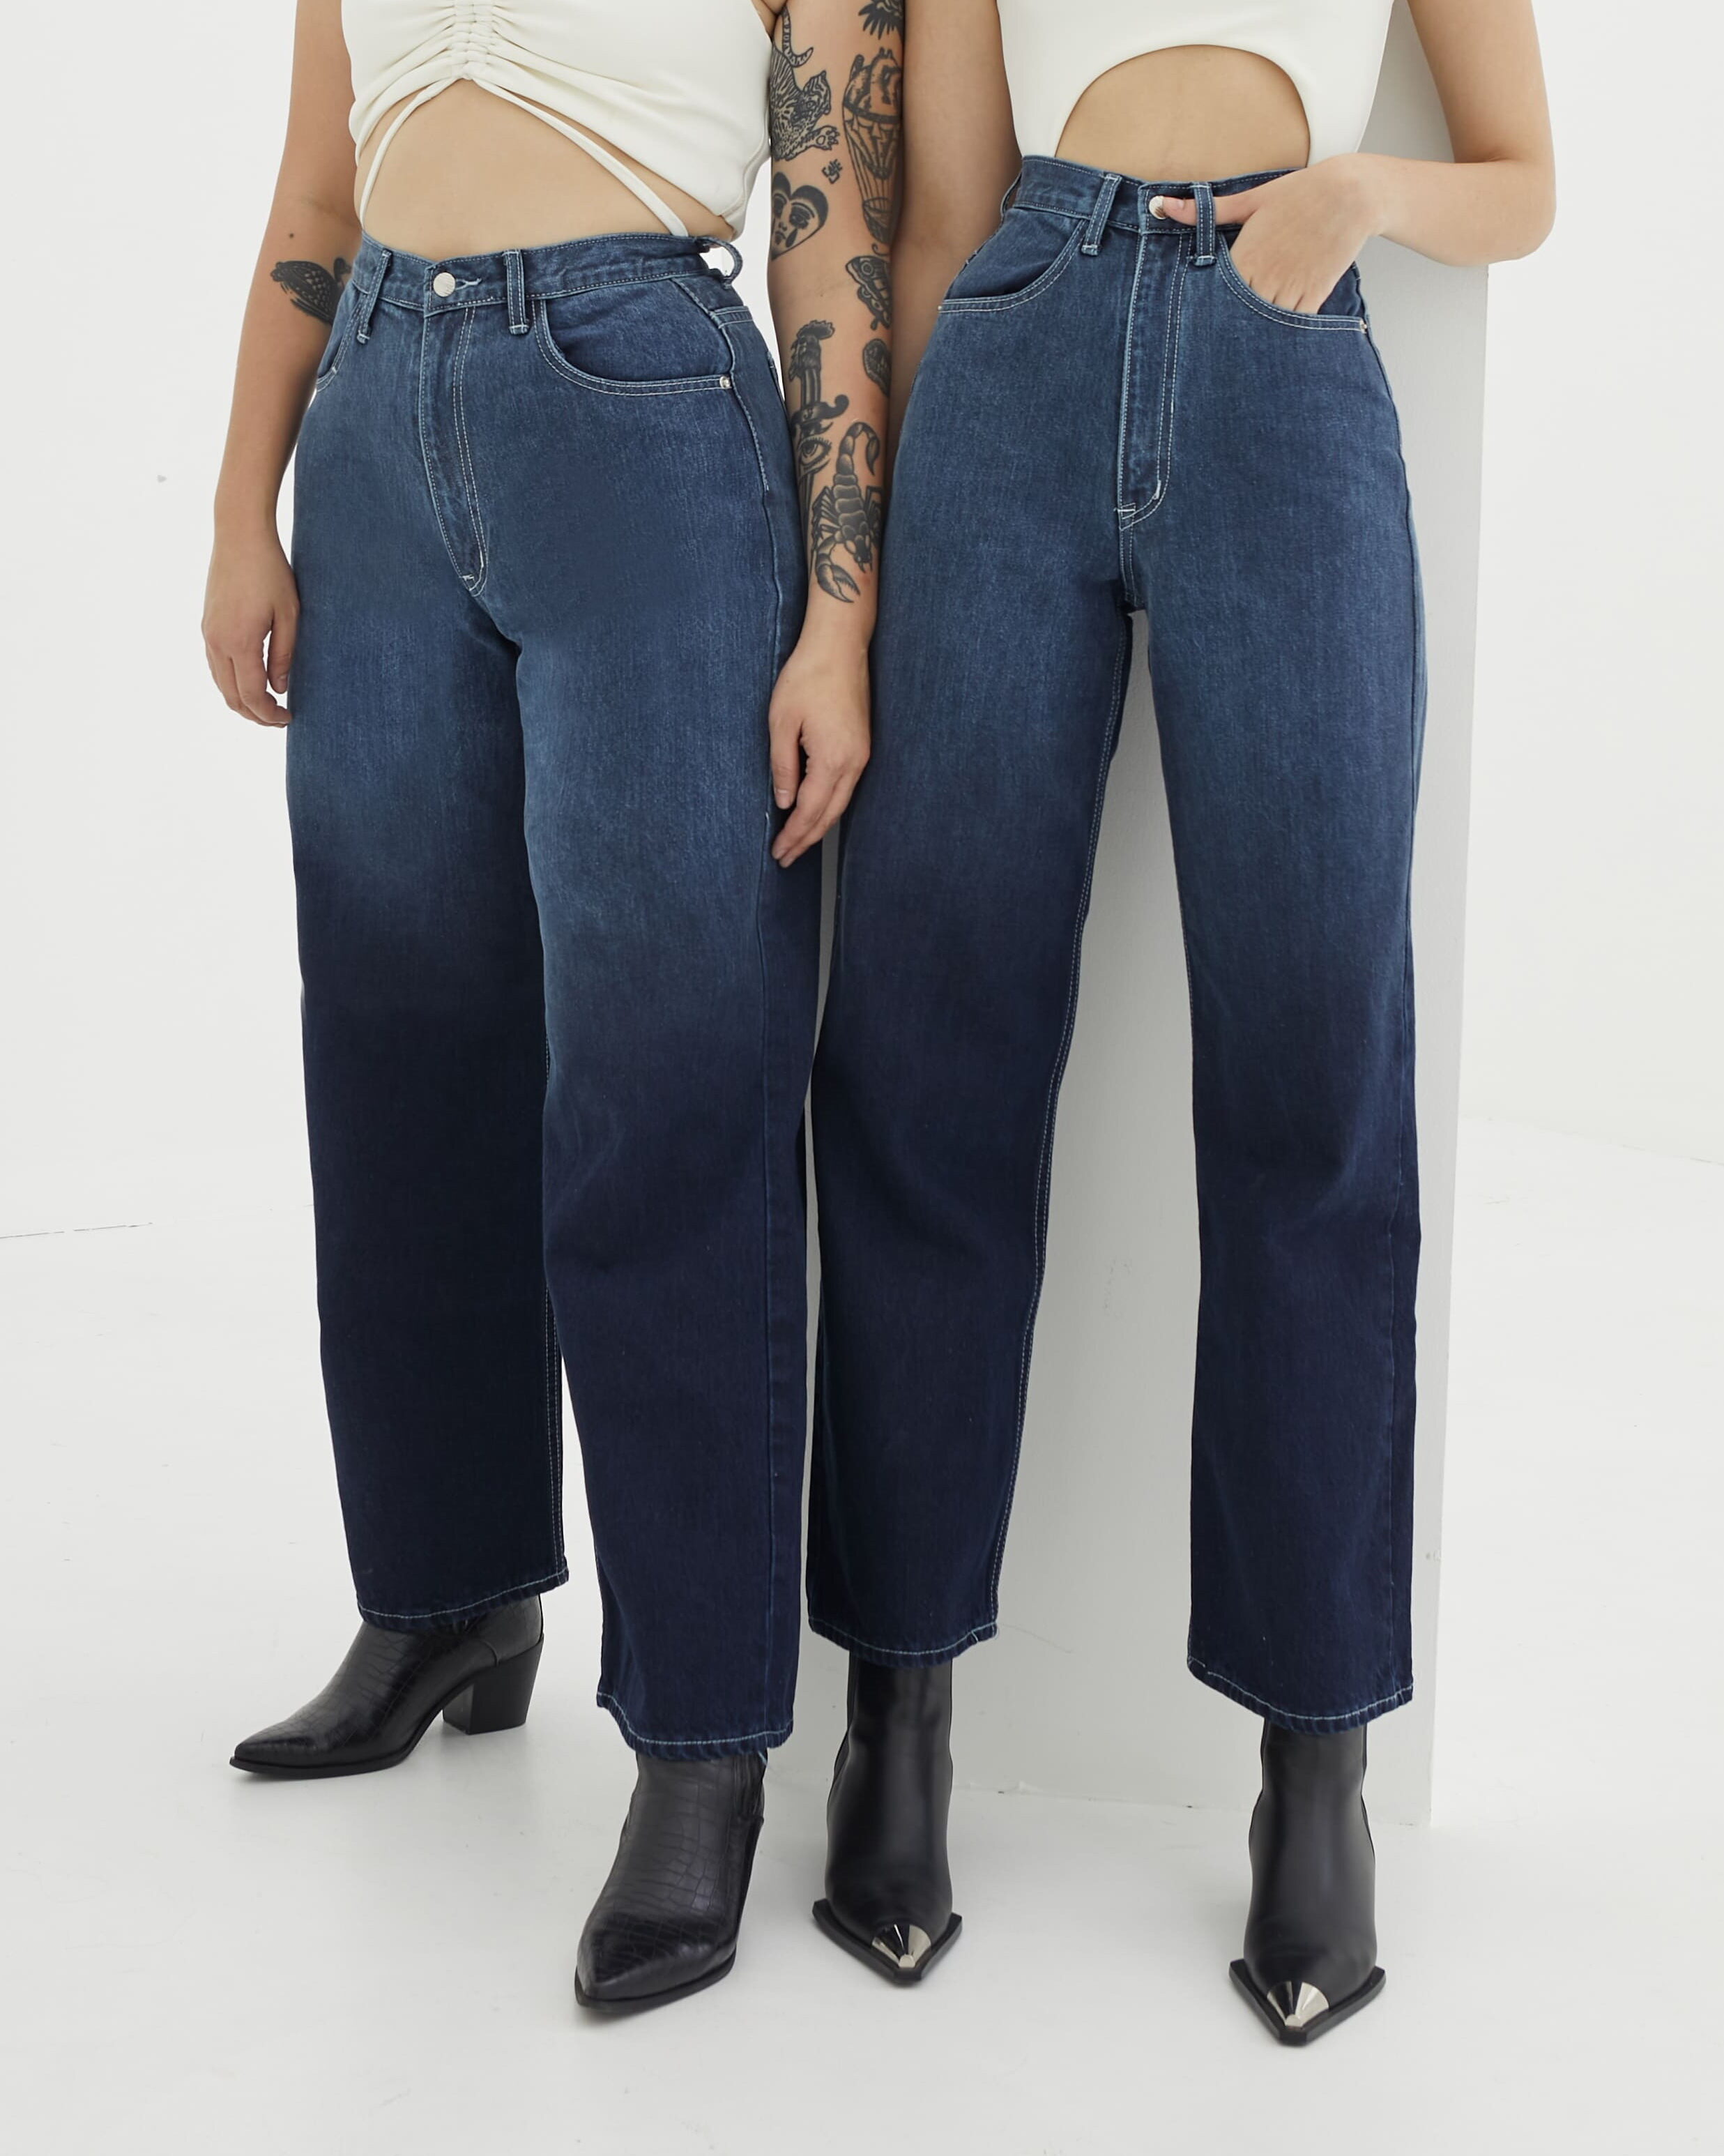 Merge official - Ombre Jeans01 2 colors (ไซส์ที่หมด สามารถกด Pre Order ได้นะคะ จัดส่งภายใน 15 - 20 วันค่ะ)